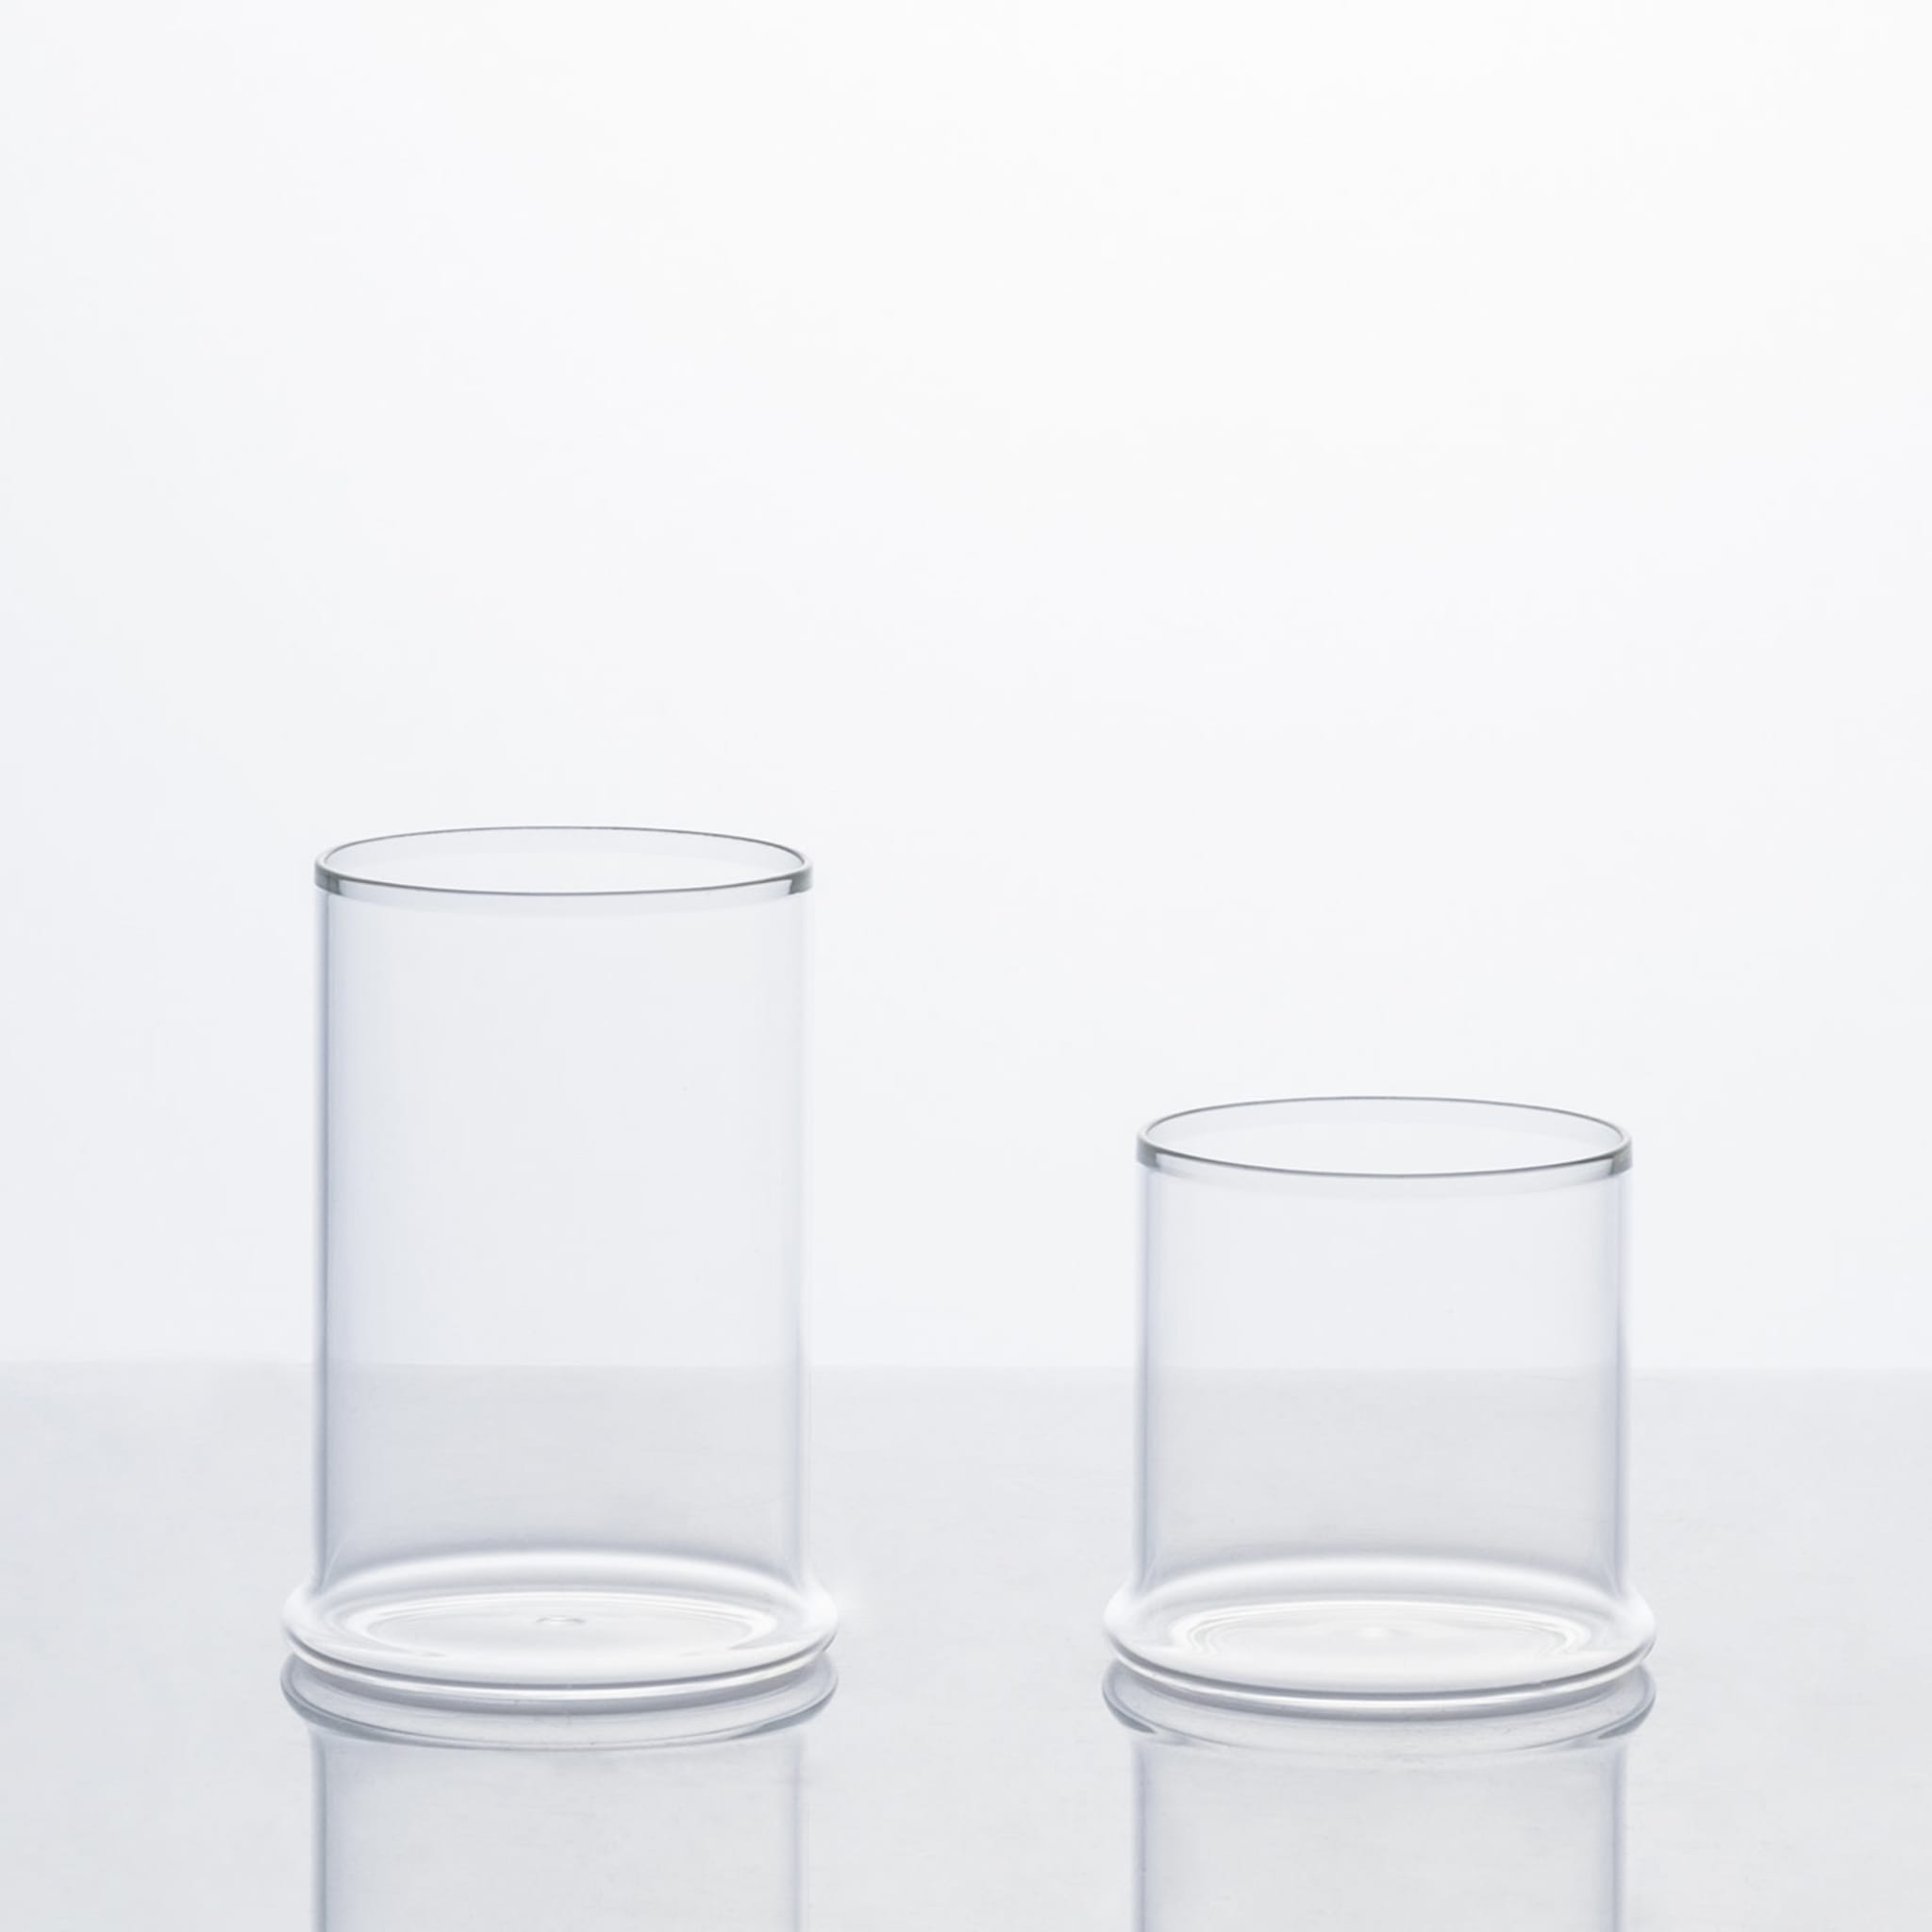 Take Set of 2 Water Glasses - Alternative view 1